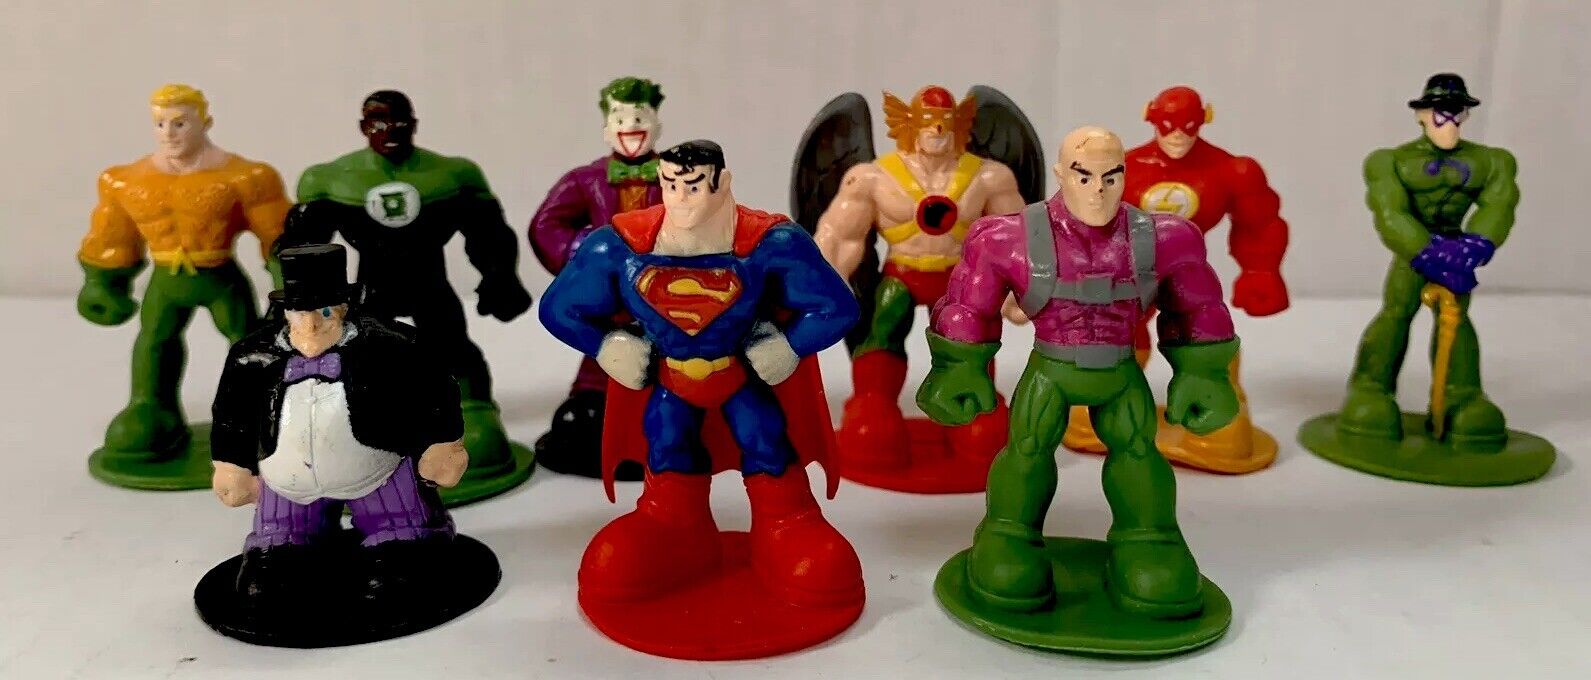 DC Comics Super Powers Mini Figures Batman Joker Hulk Riddler Flash More (9)